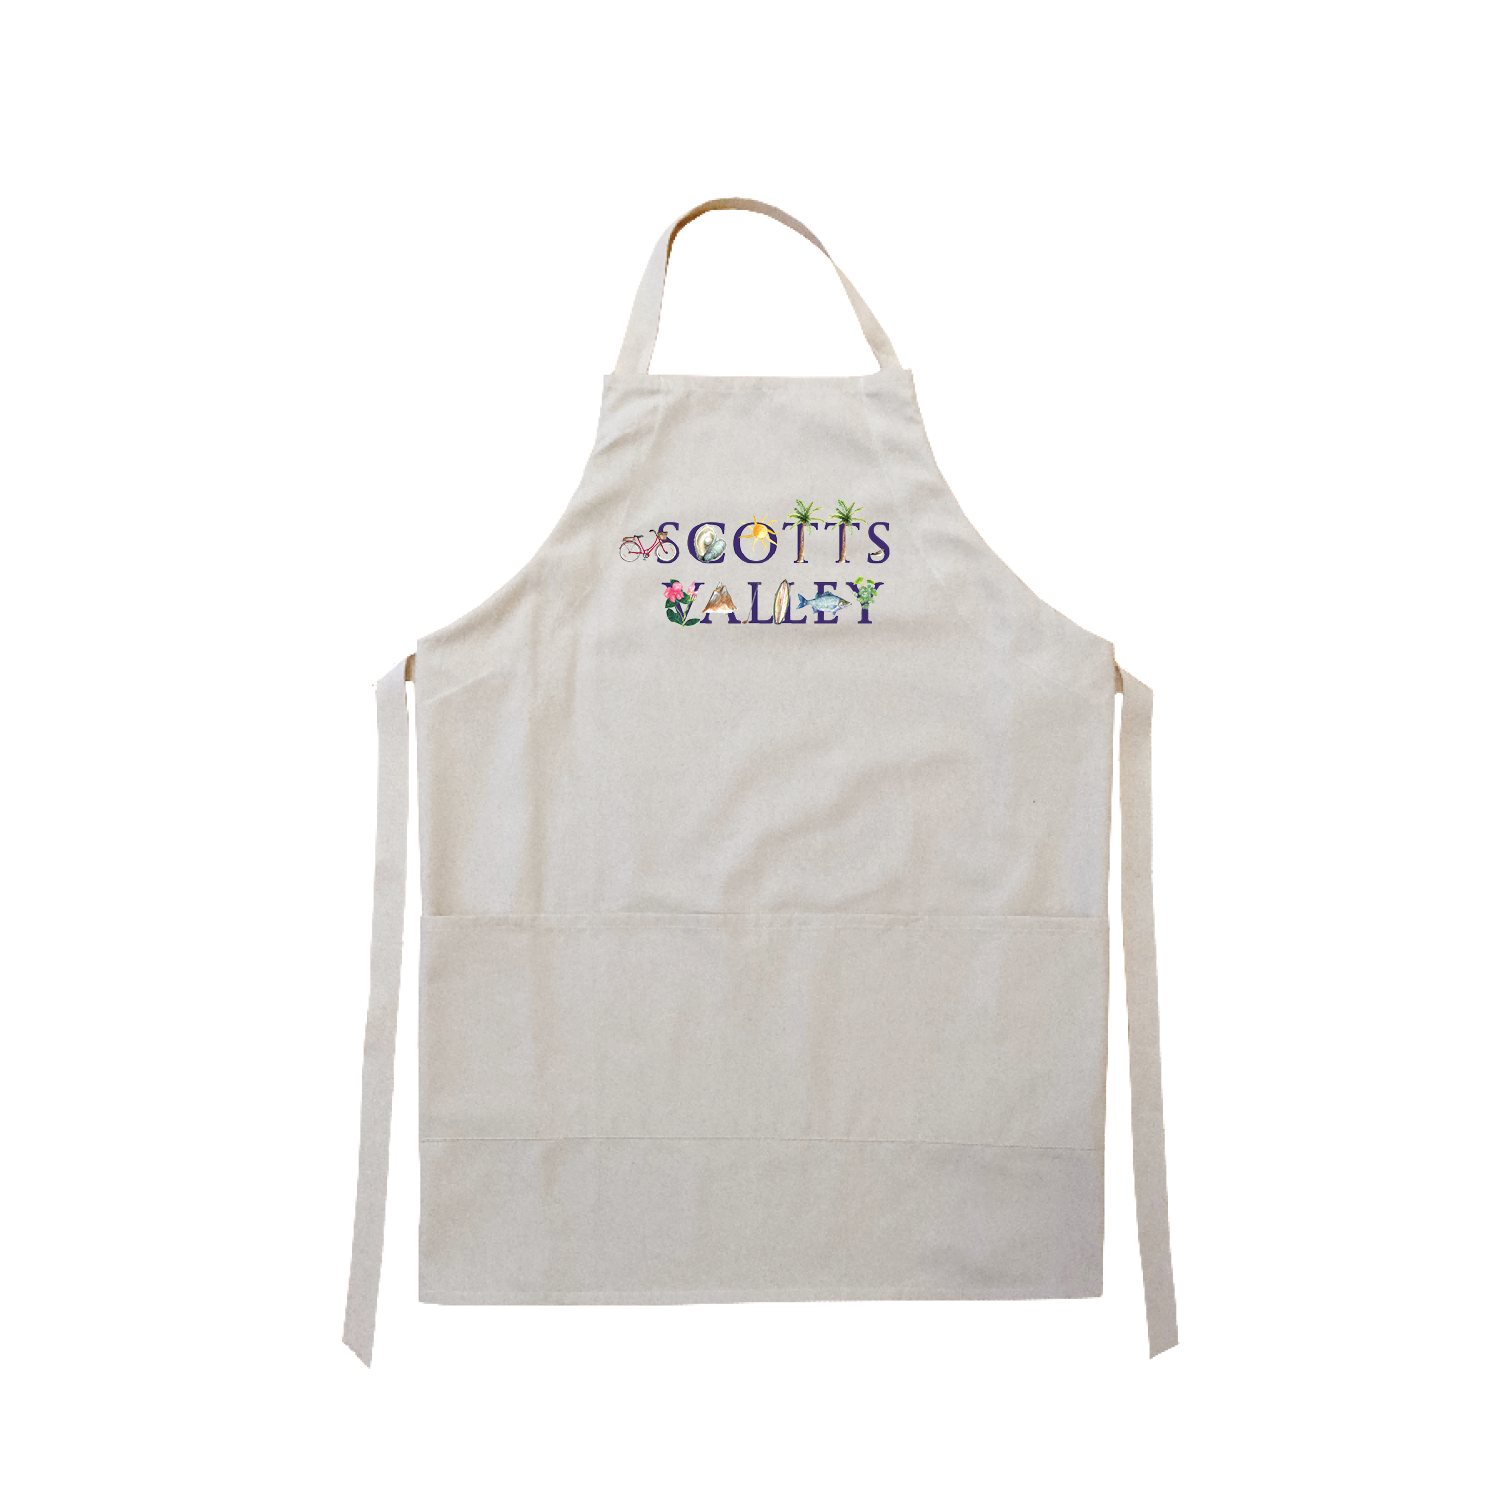 scotts valley apron